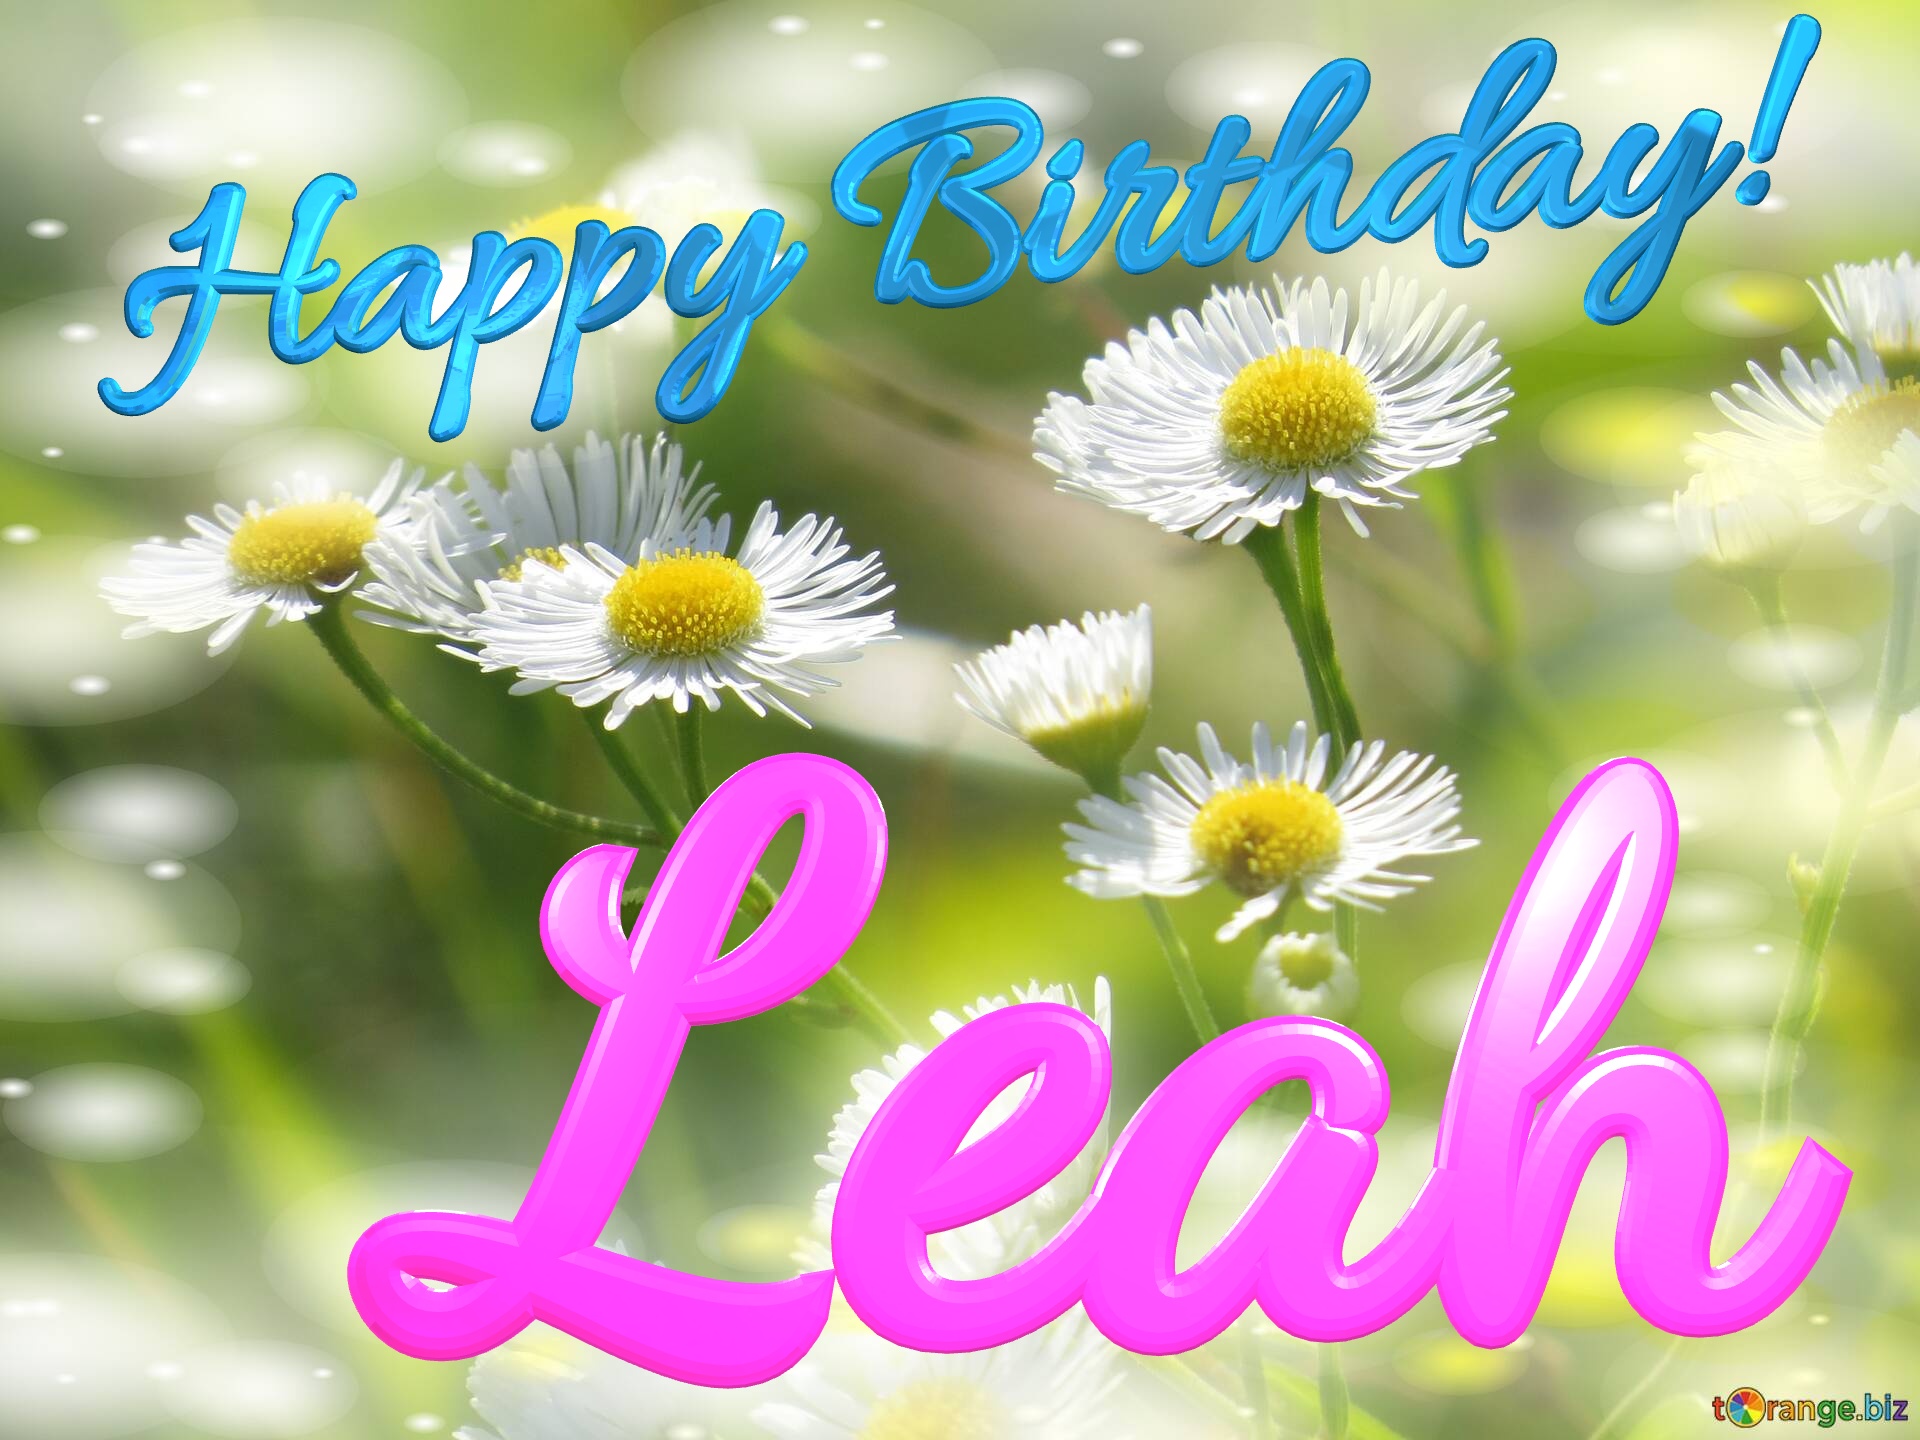 Leah Happy Birthday! Daisies bokeh background №0